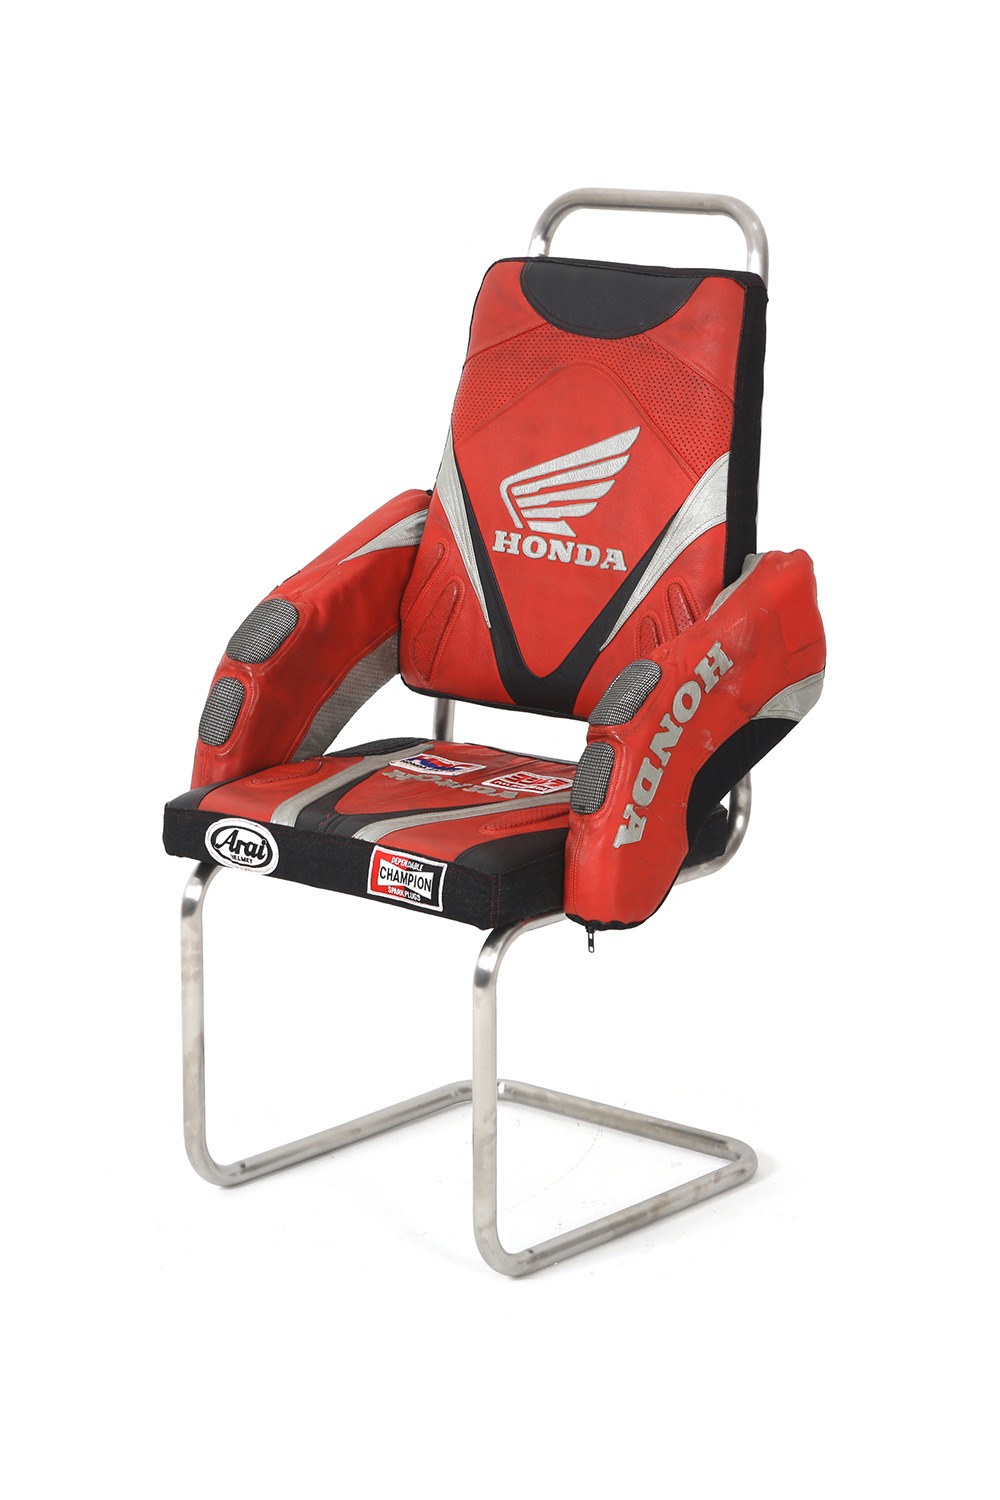 Chair C type 003 - Deconsturcted Honda Racing Jacket Single Chair